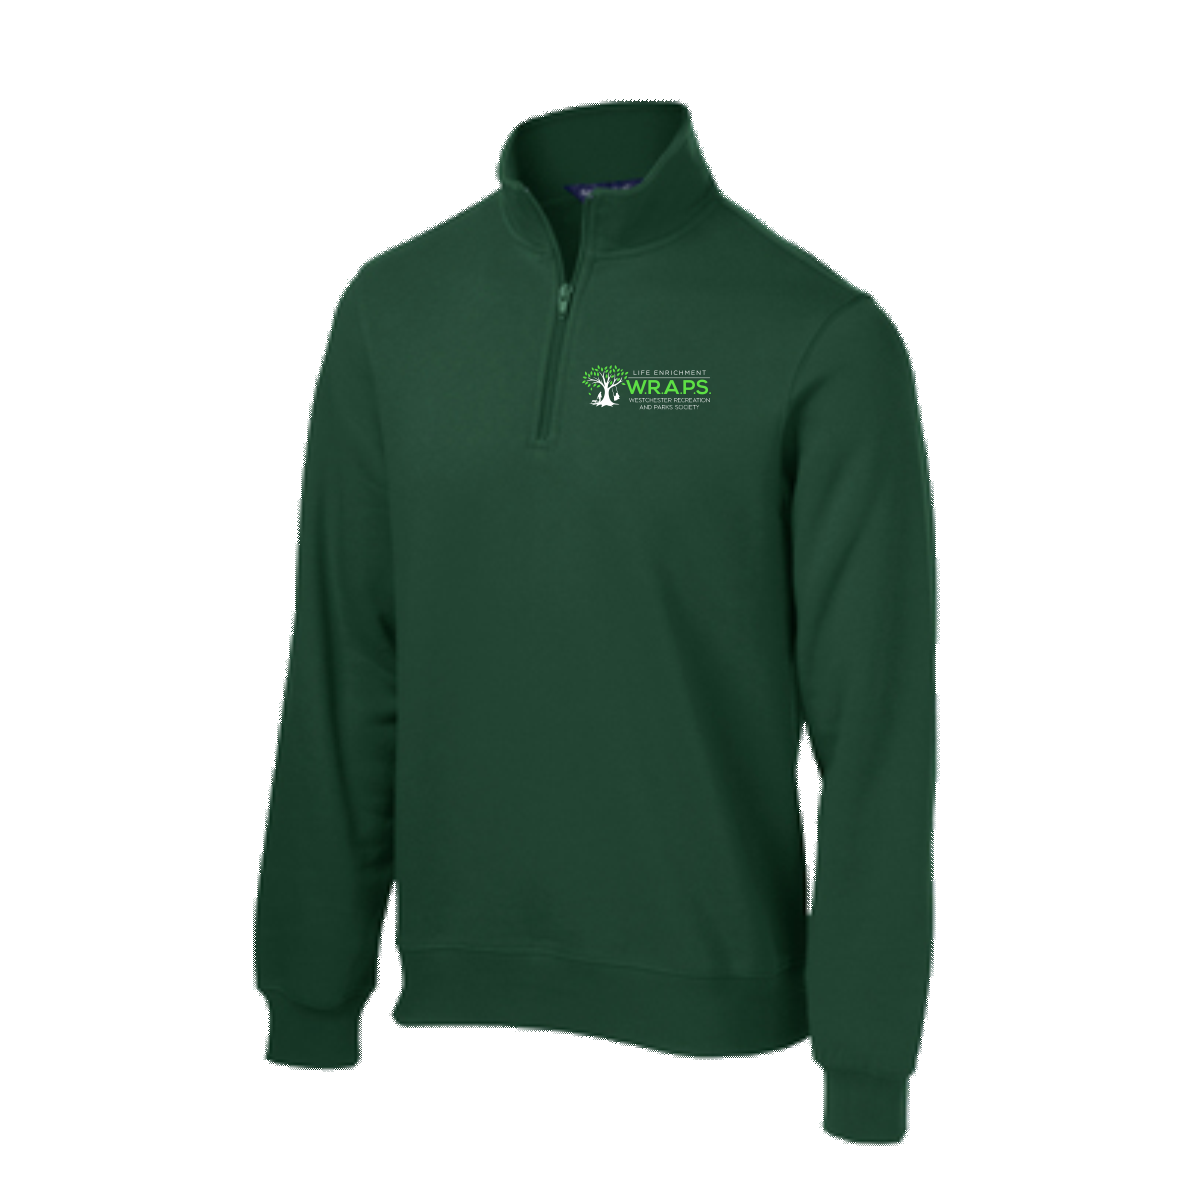 WRAPS – Sport-Tek® 1/4-Zip Sweatshirt – The League Brand